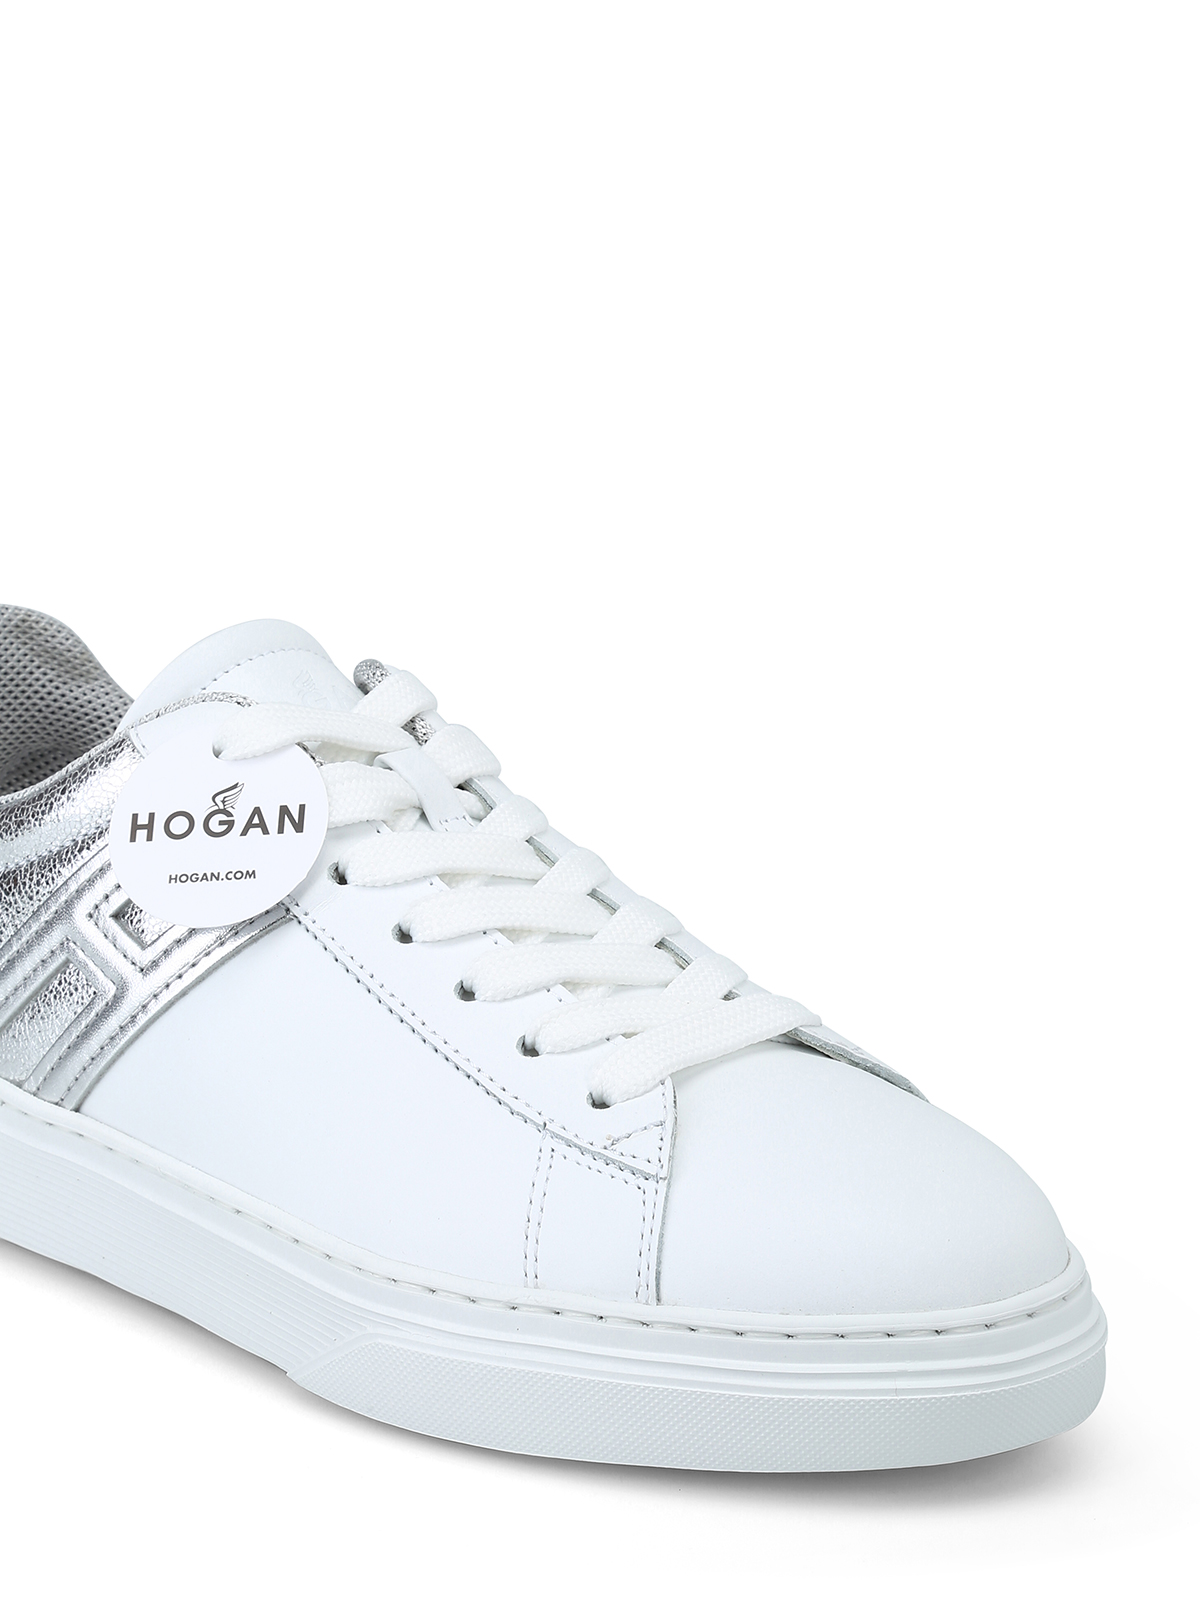 Hogan - Sneaker H365 bianche e argento - sneakers - HXW3650J971JCU0351